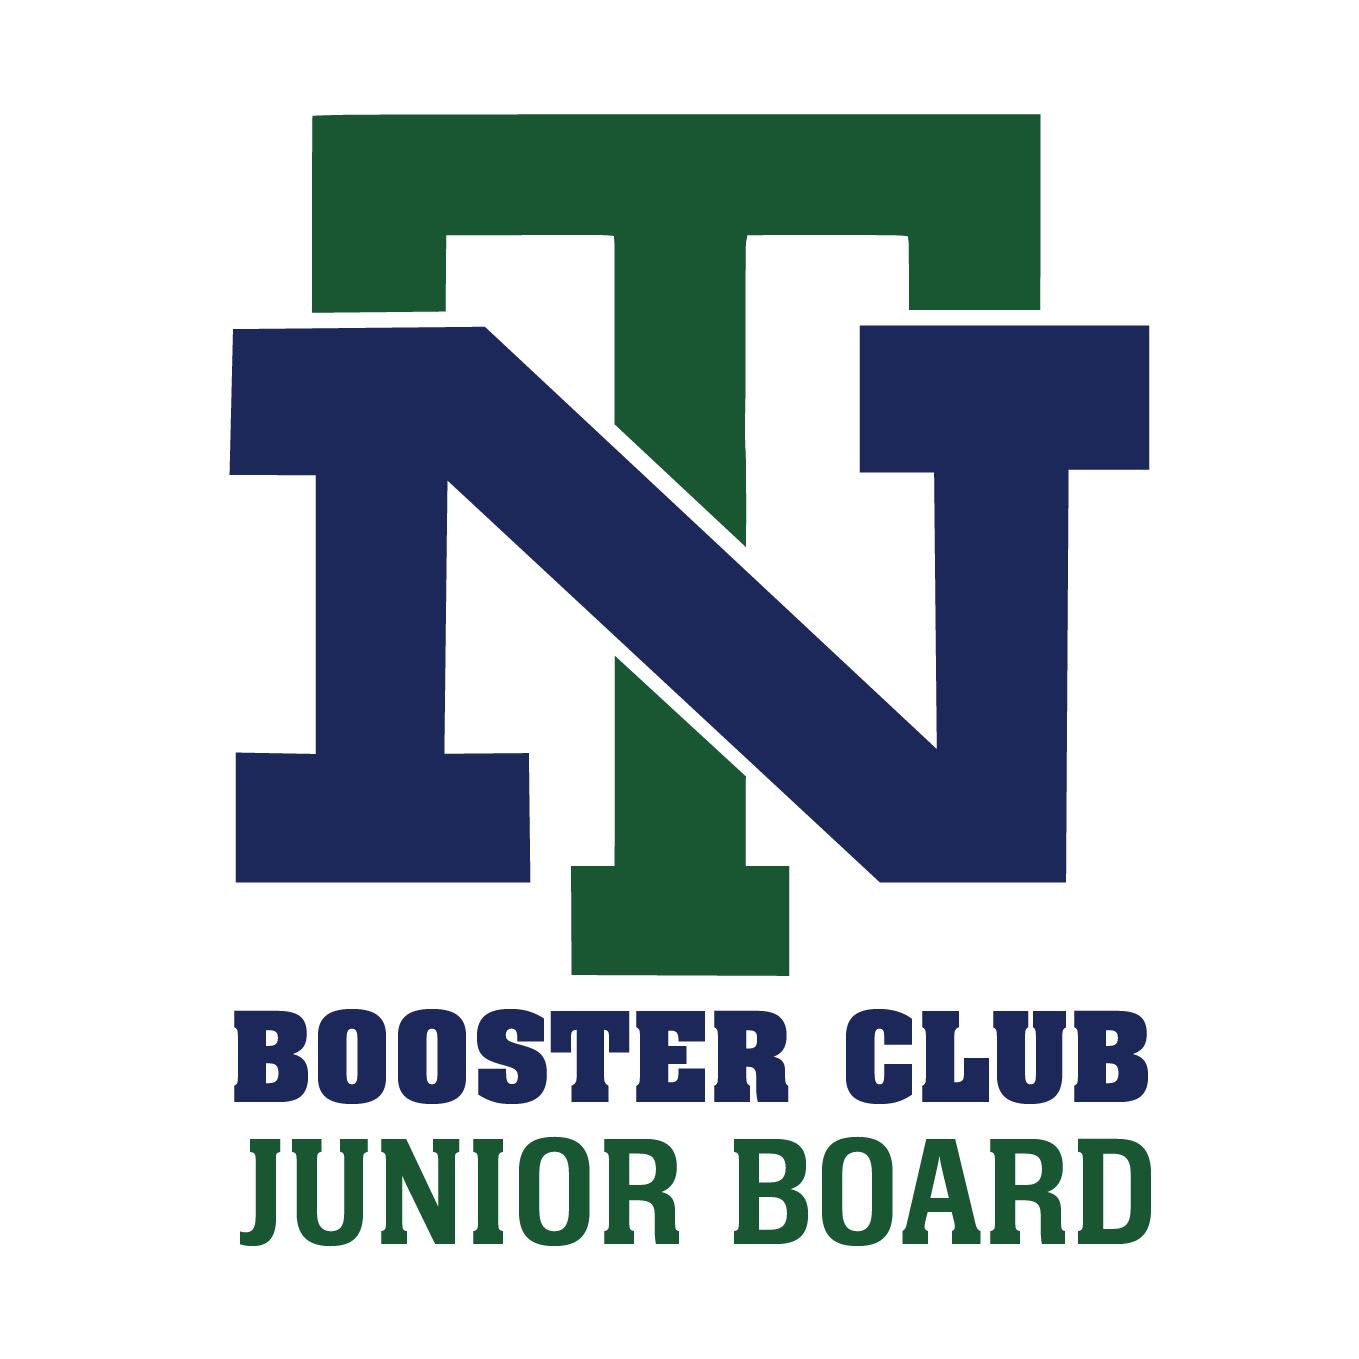 Booster Club Junior Board logo